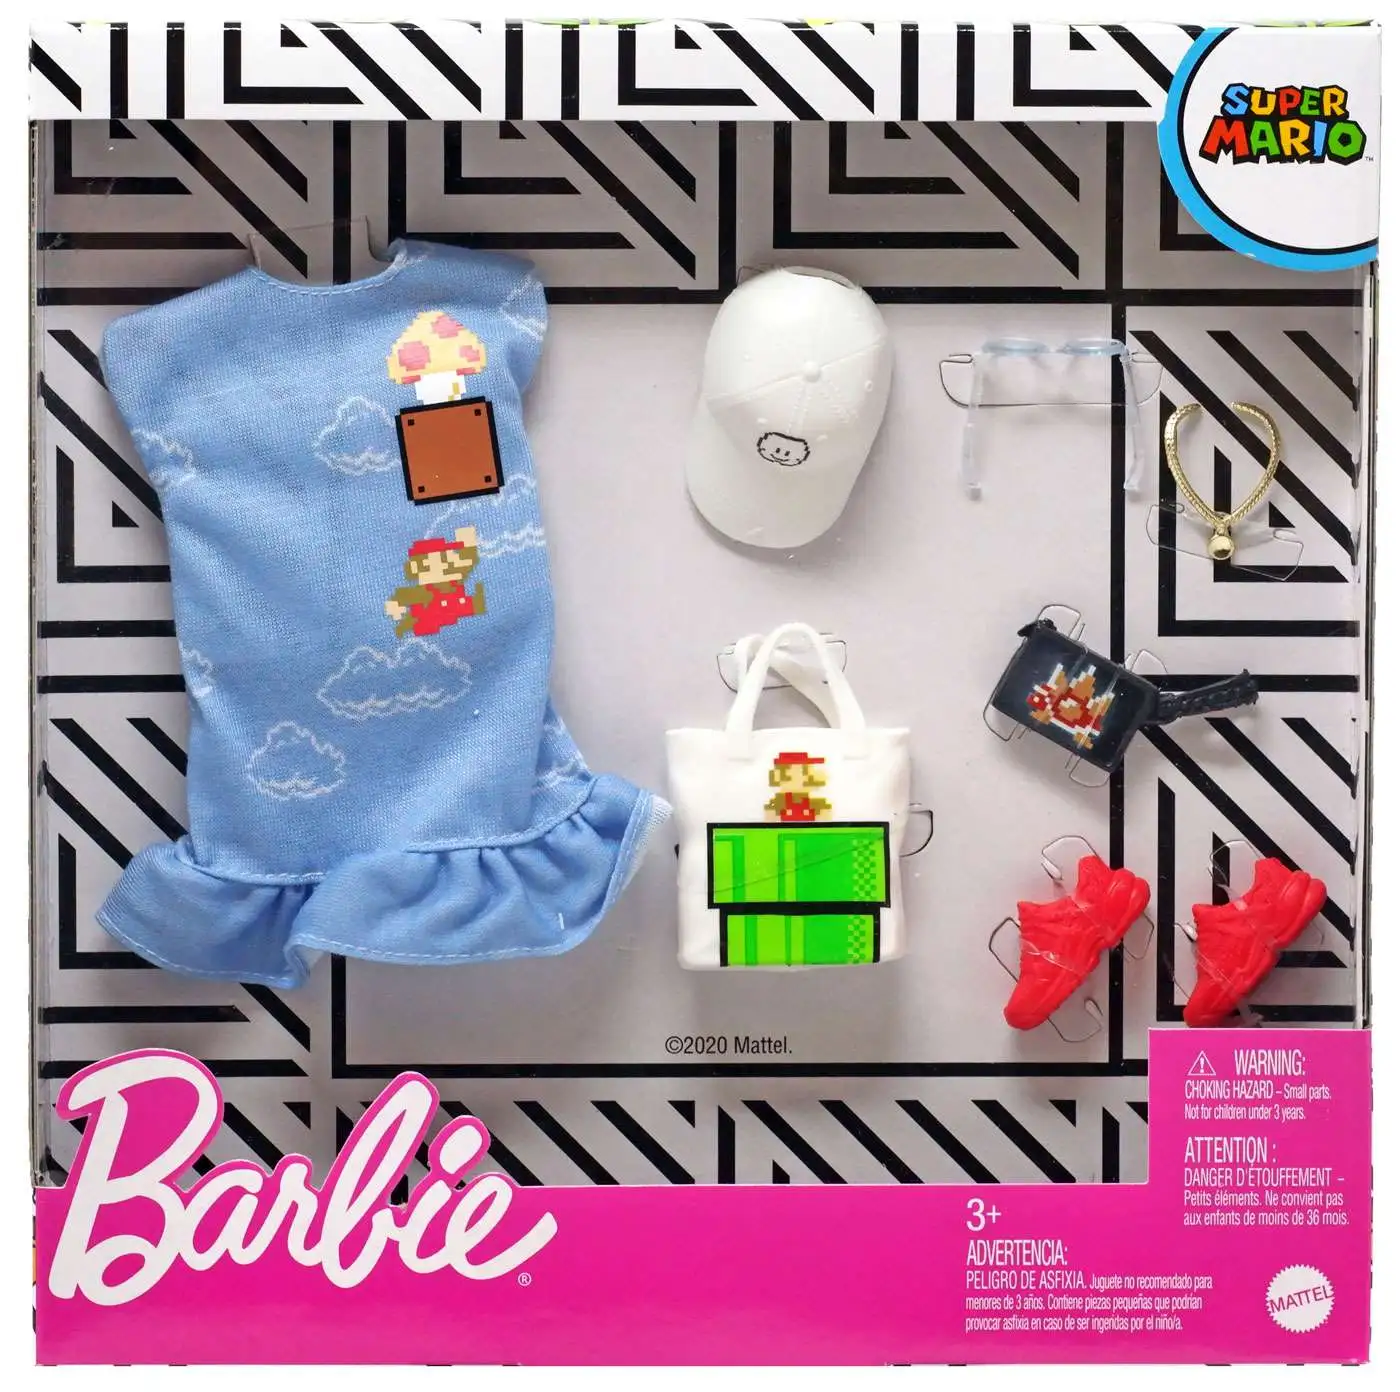 2020 Mattel Barbie Fashion Super Mario Outfit & Accessories for sale online 